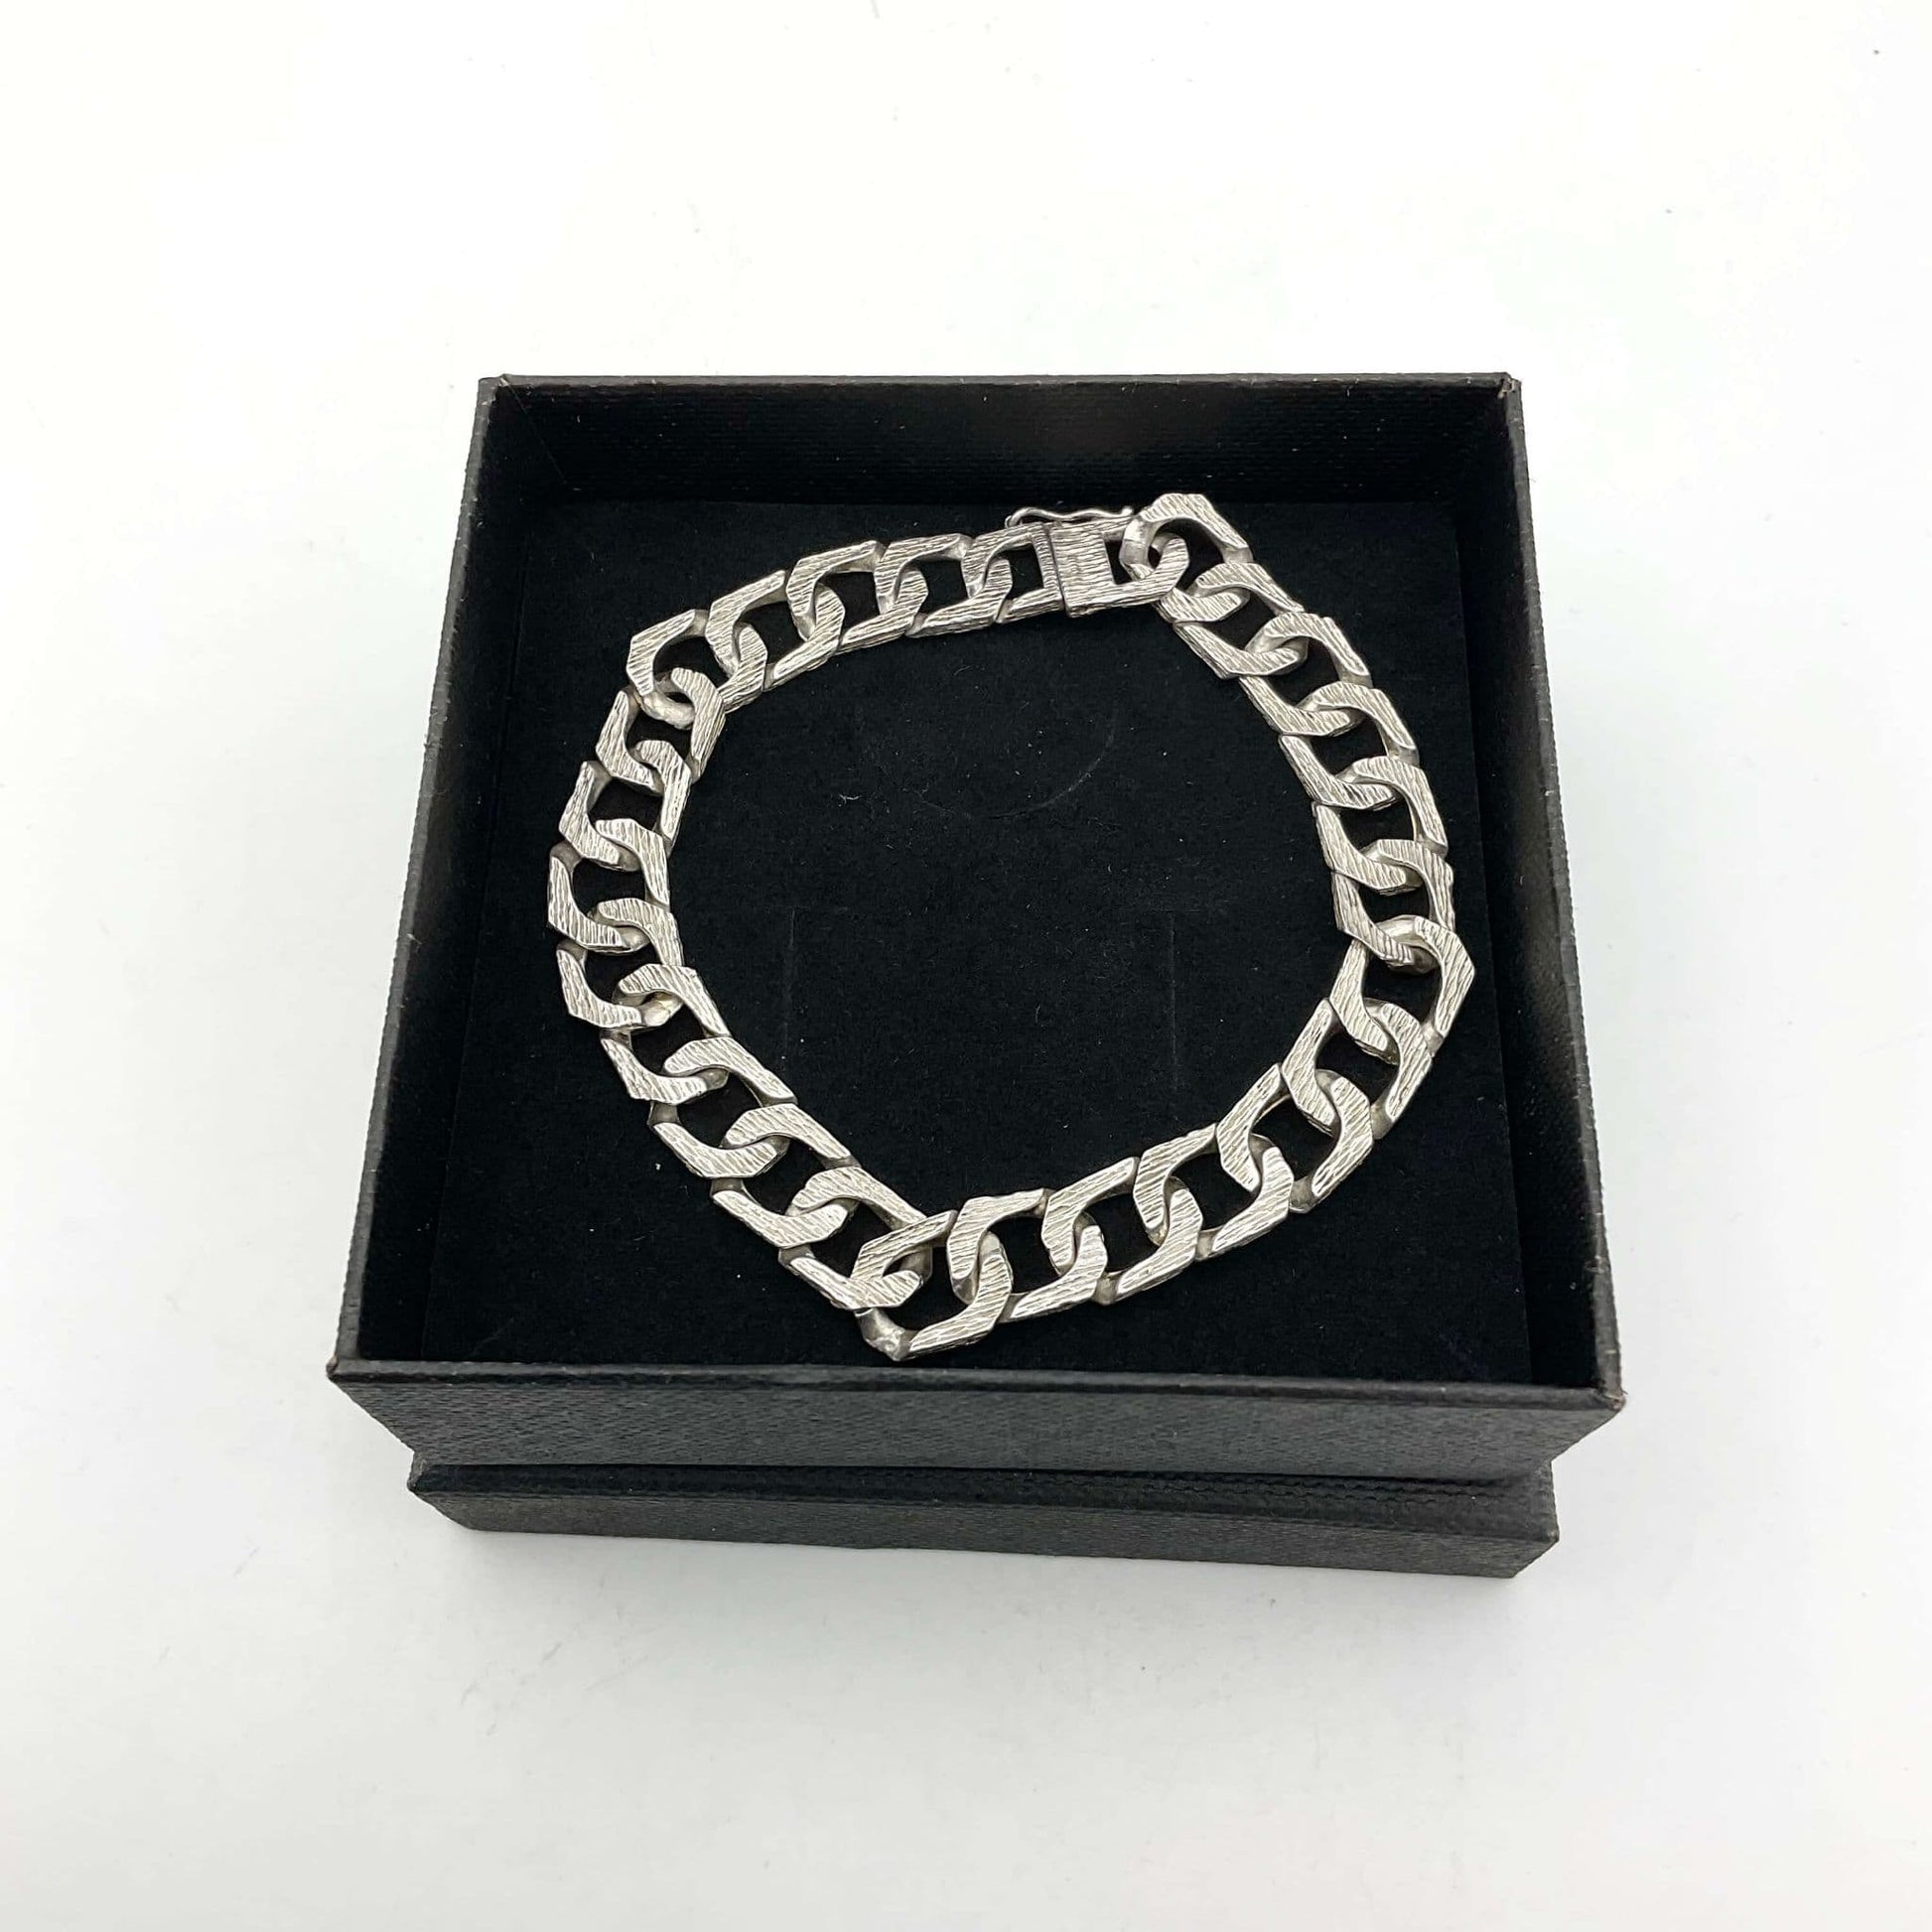 silver chain bracelet lying flat on a black presentation box